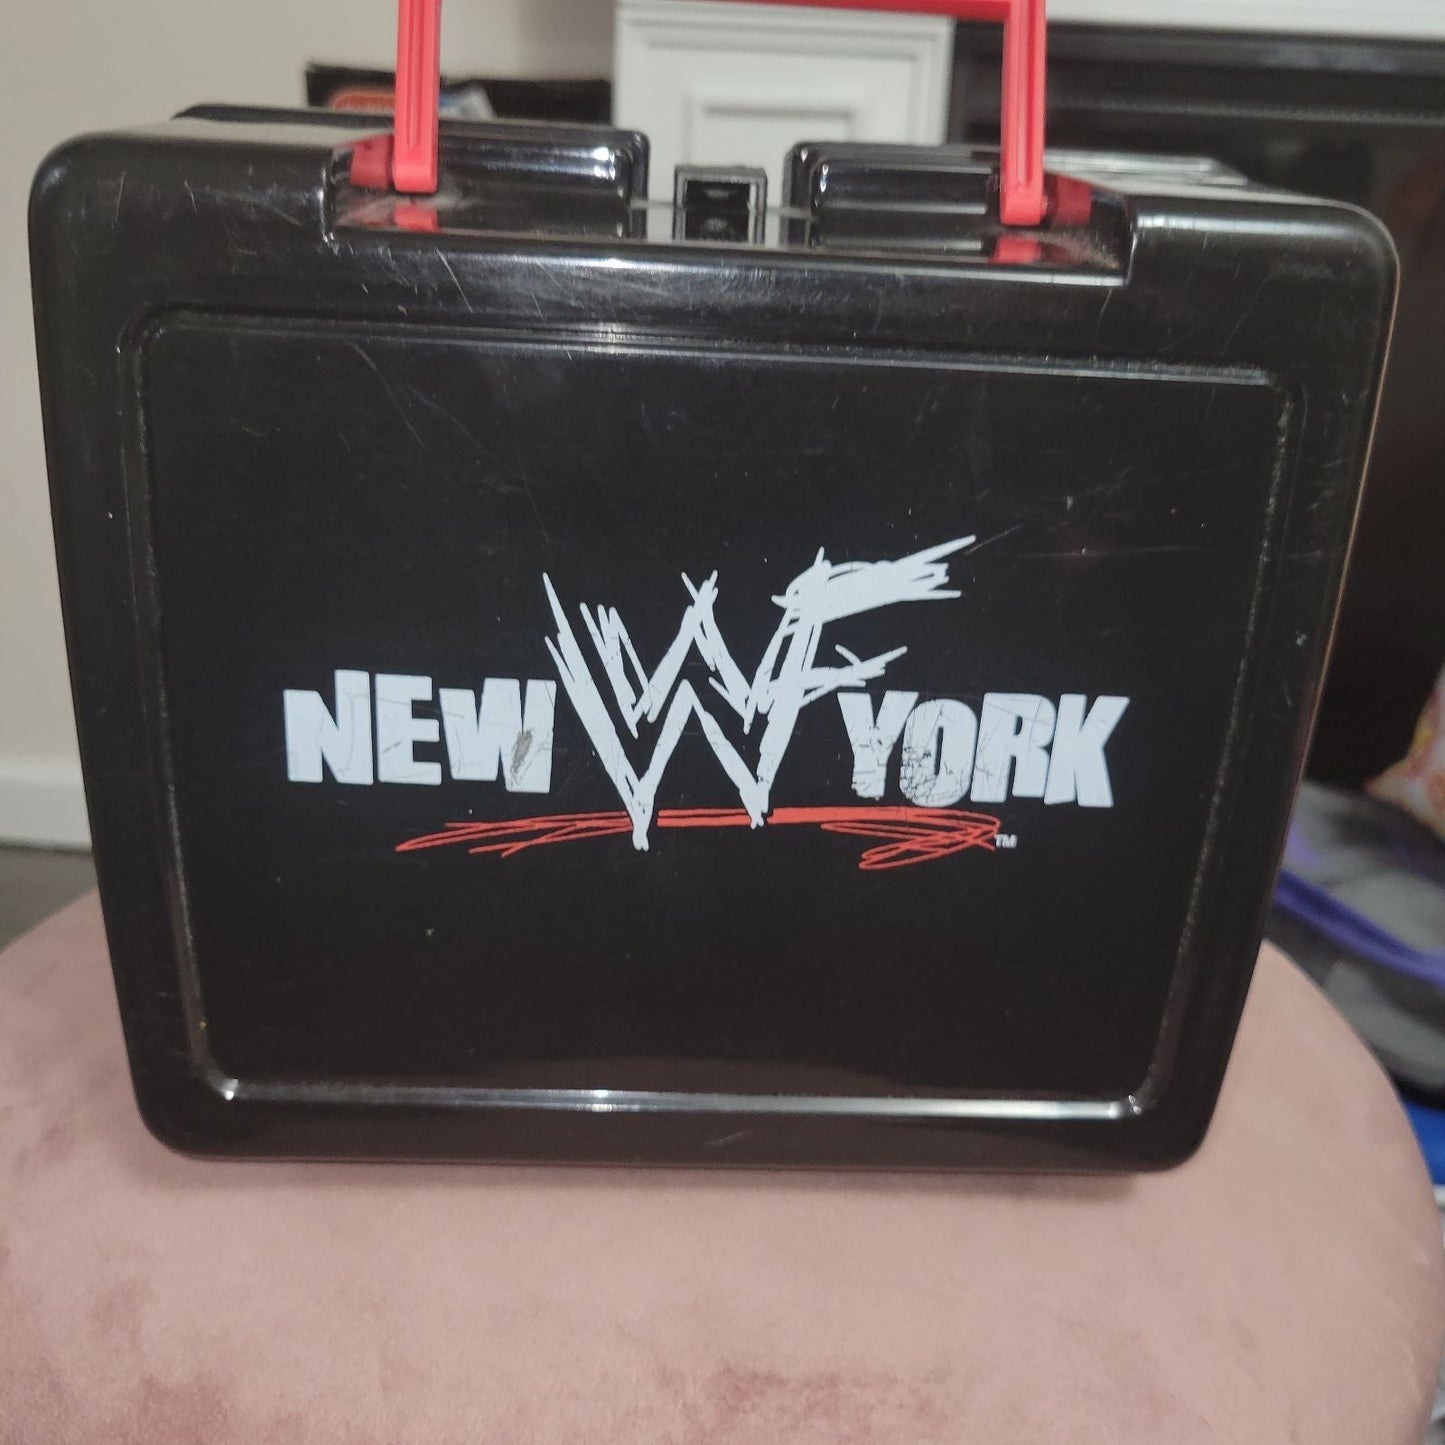 WWF New York Lunch box